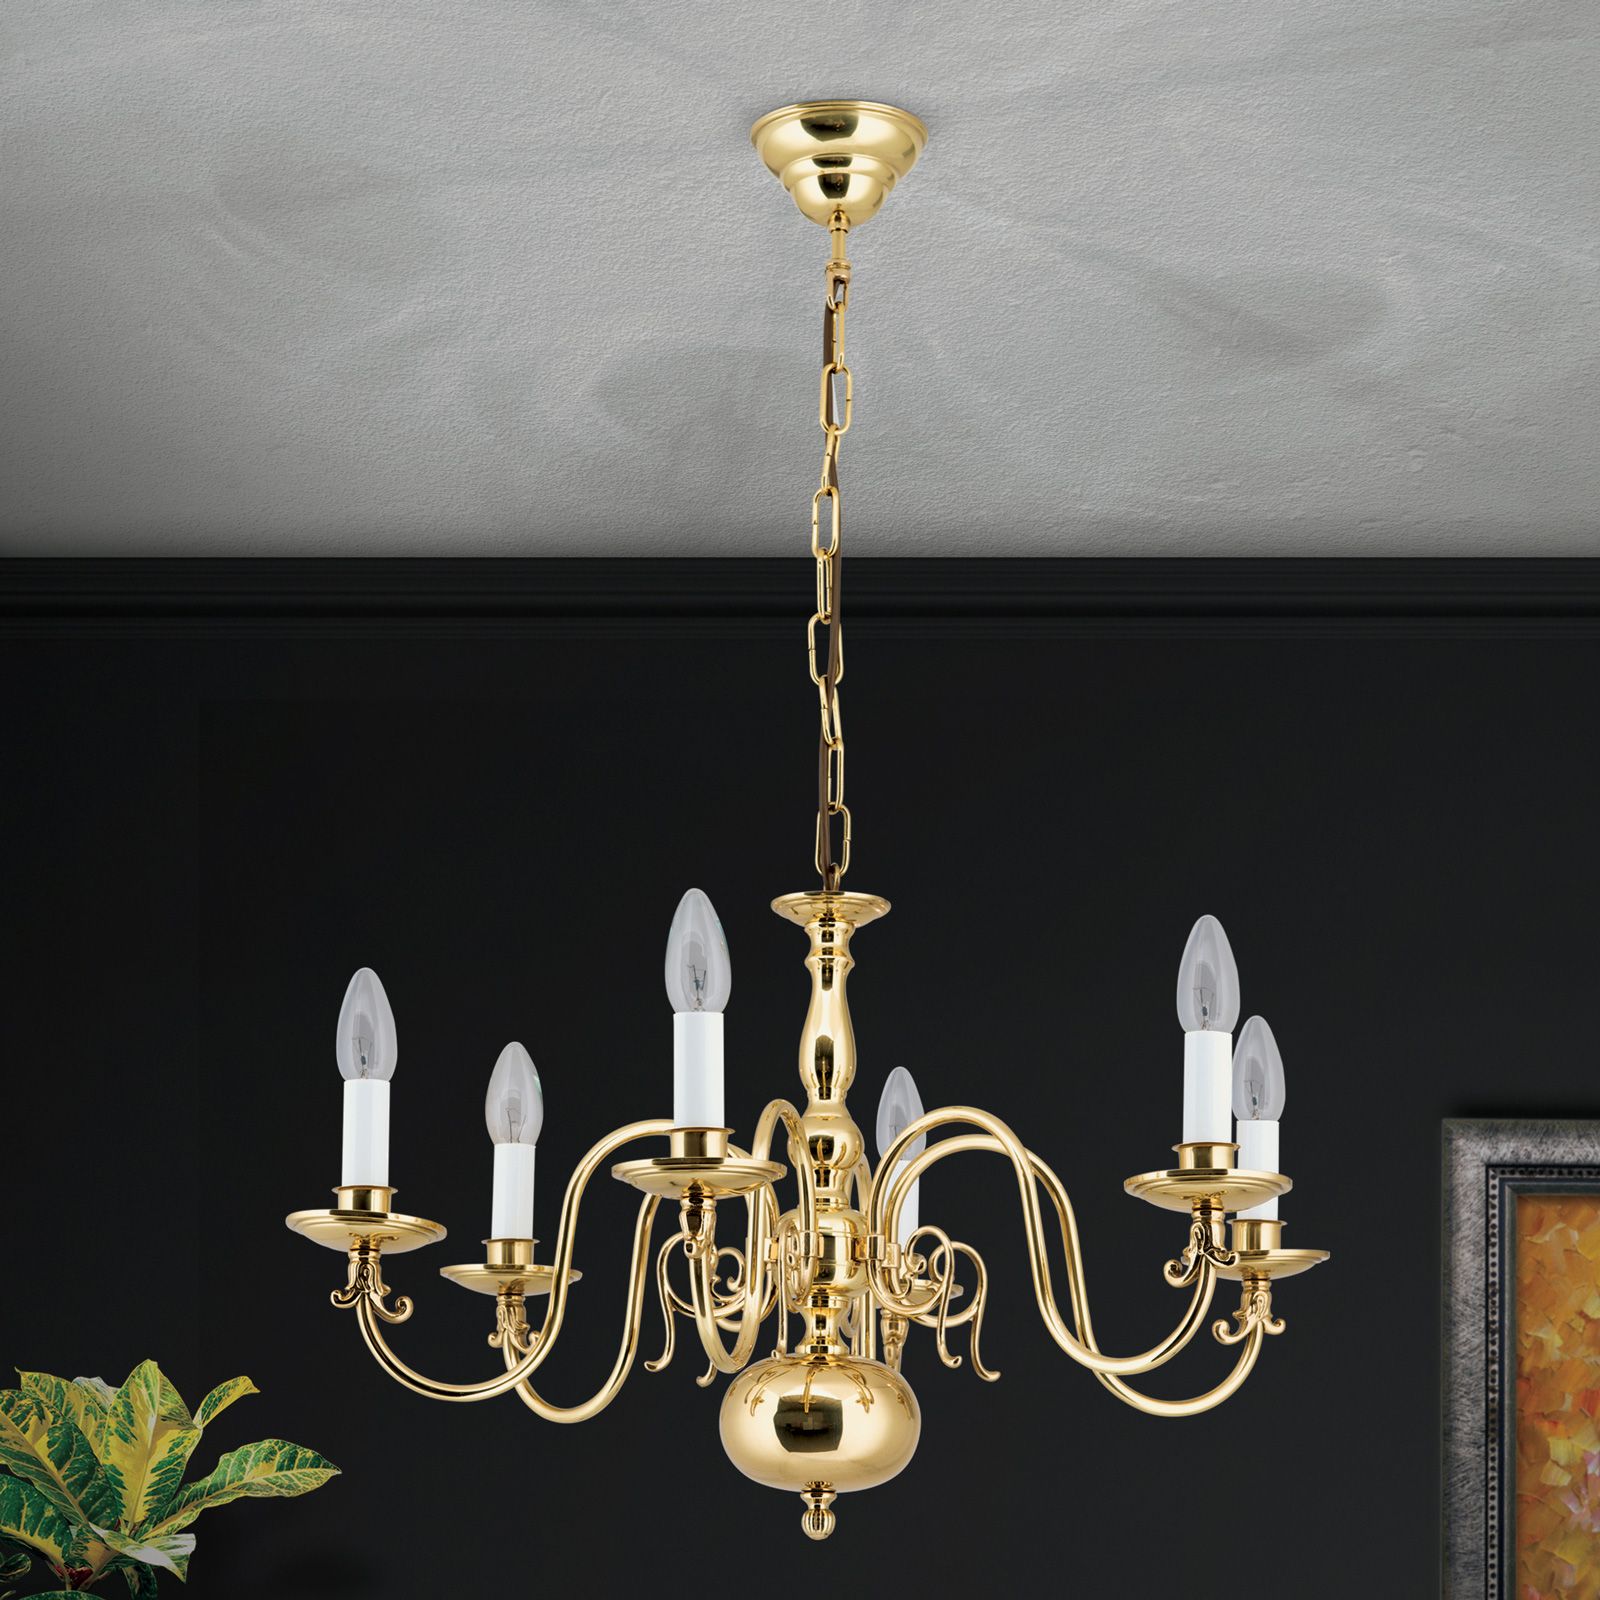 Flemish chandelier, 6 lamps, Shiny Brass finish